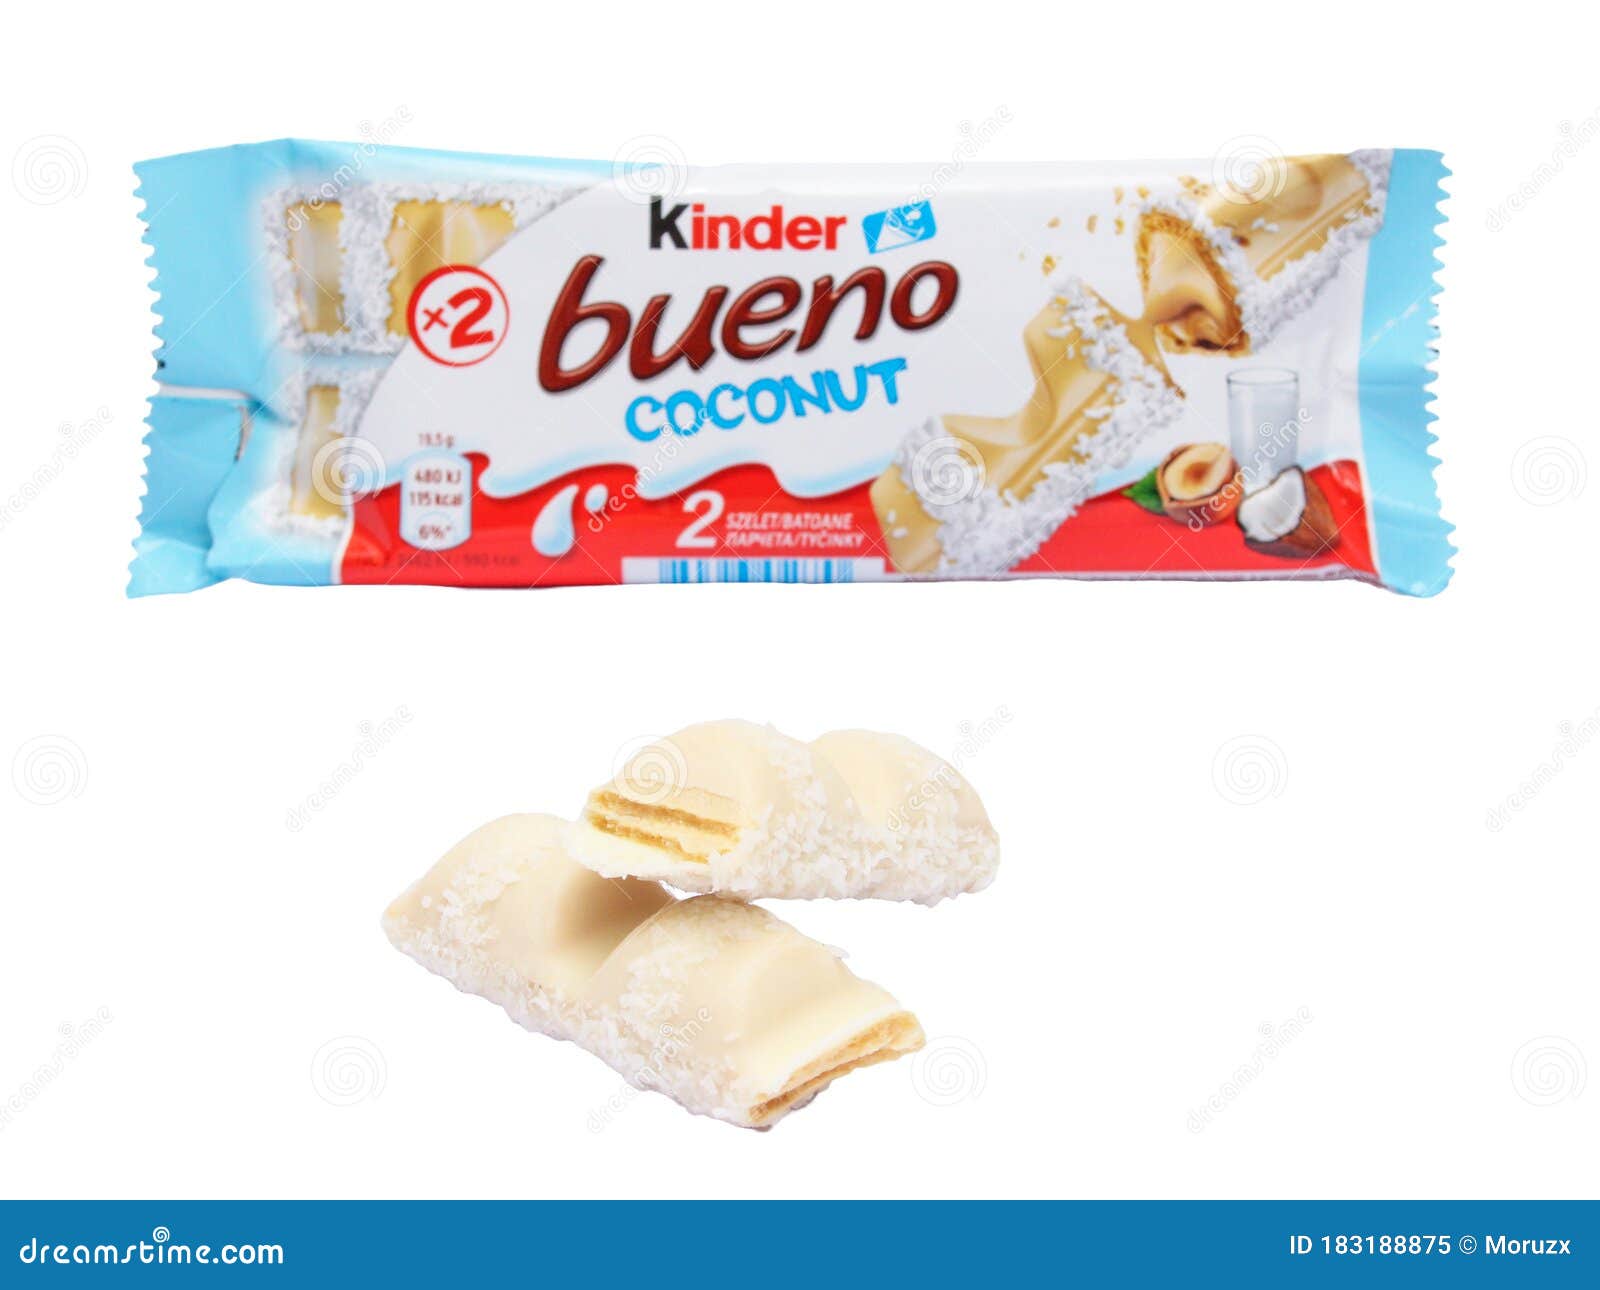 Kinder Bueno Coconut Isolated on White Editorial Image - Image of romania,  bueno: 183188875